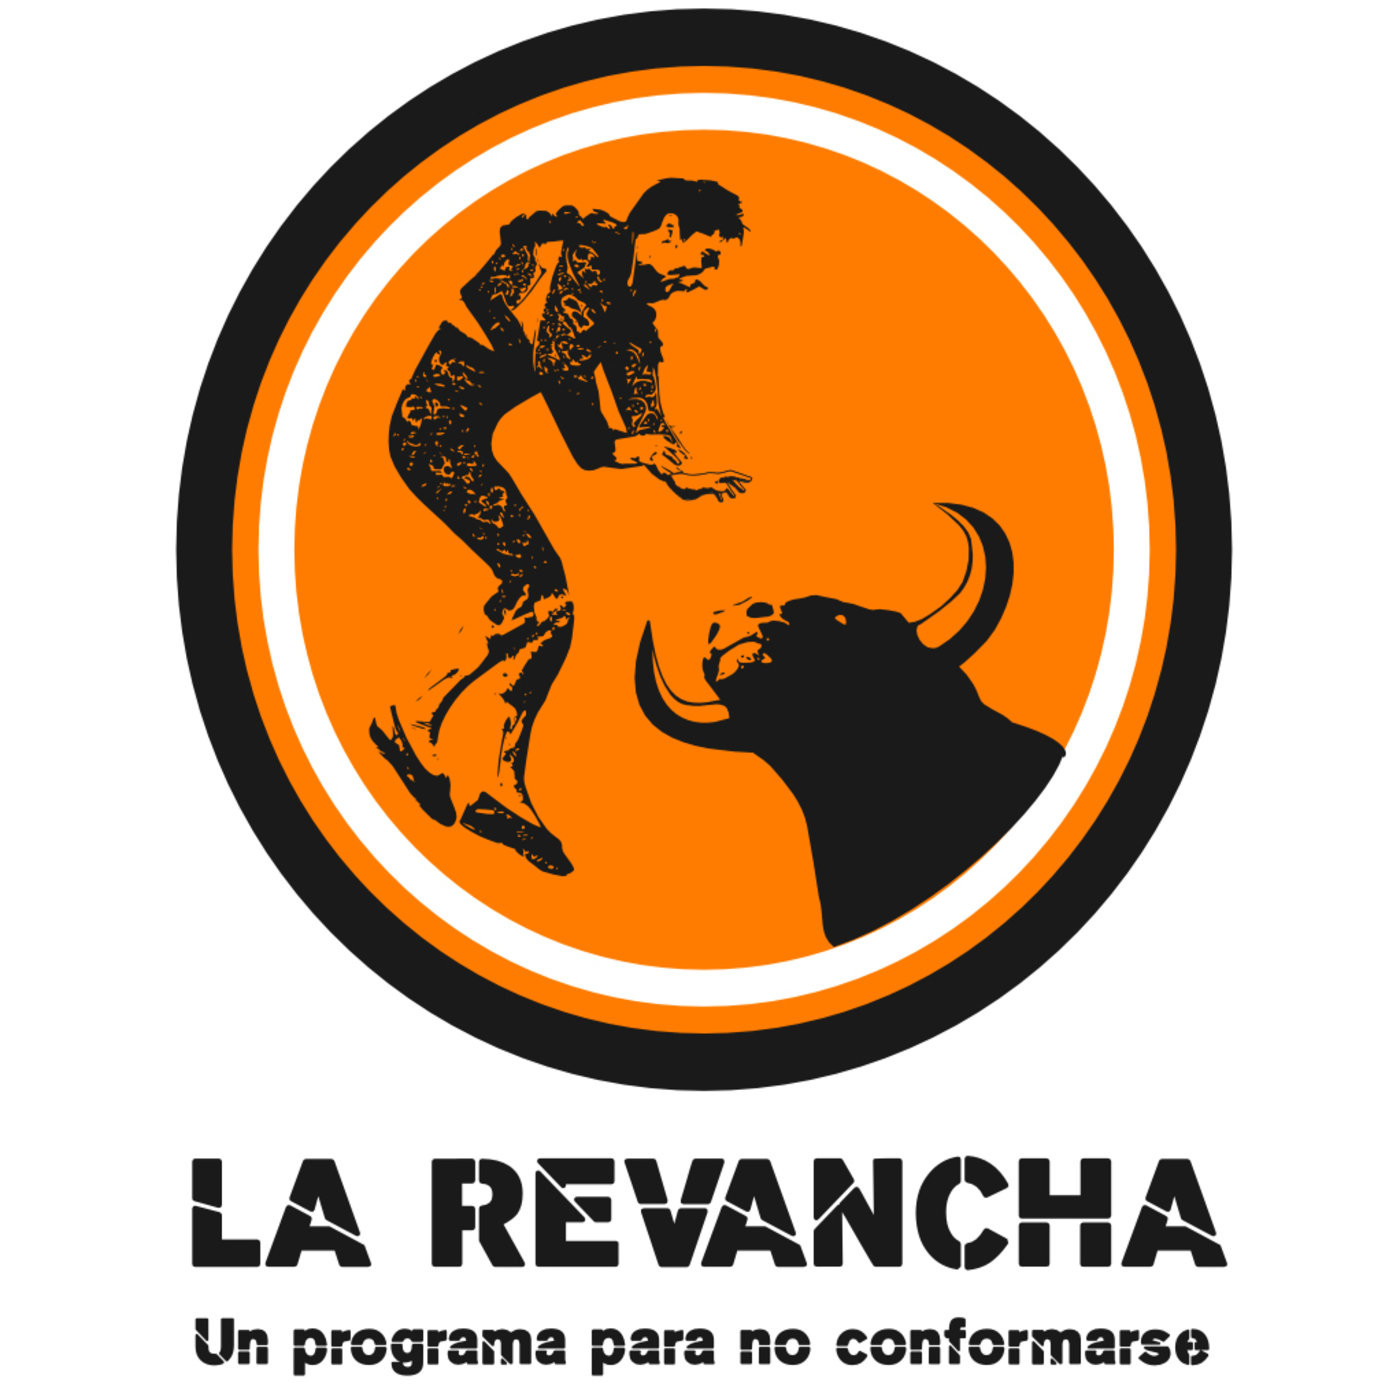 480 La Revancha 23-10